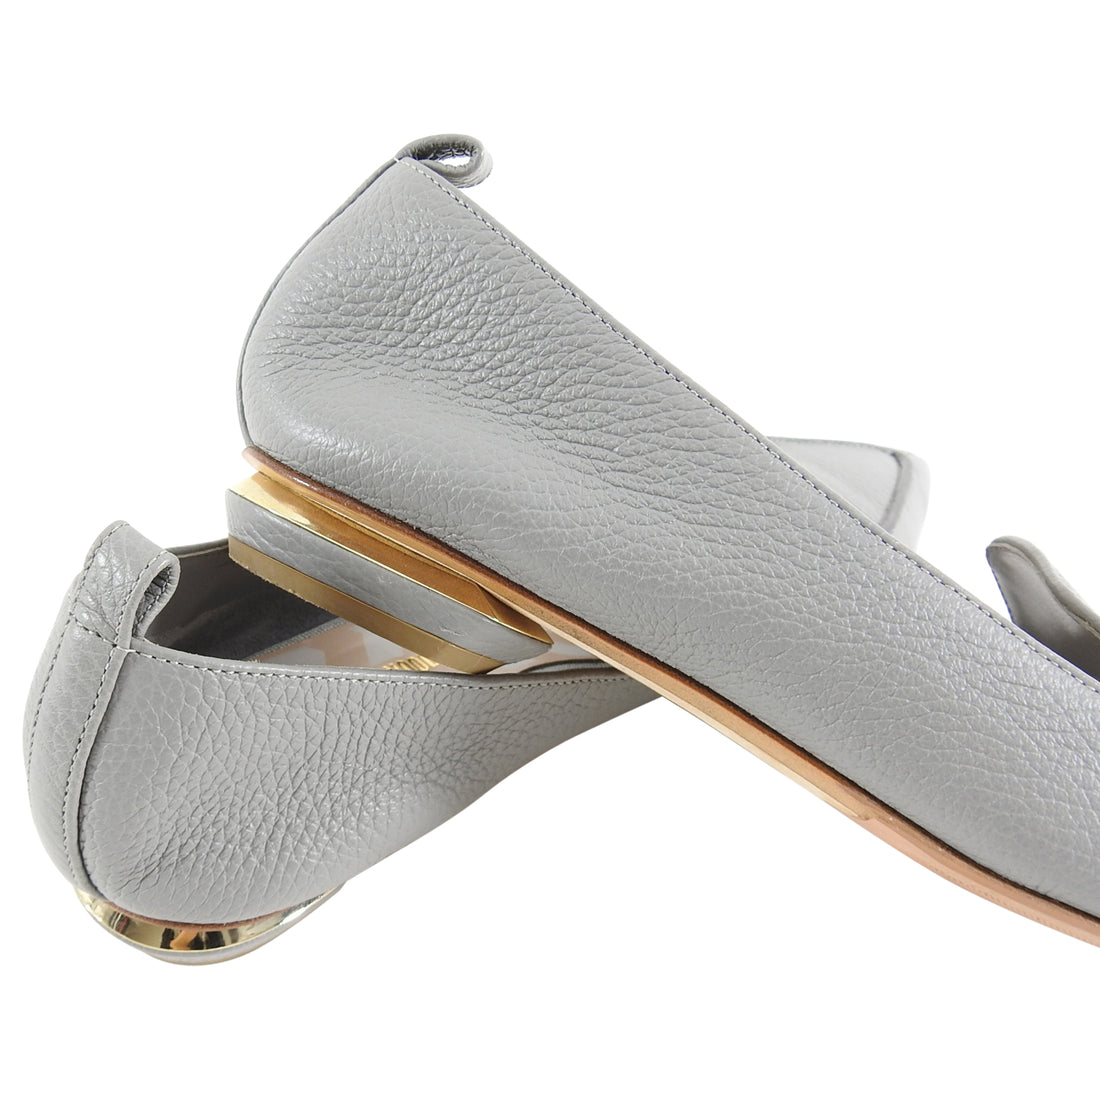 Nicholas Kirkwood Beya Silver Loafers sale flats shoes – AvaMaria